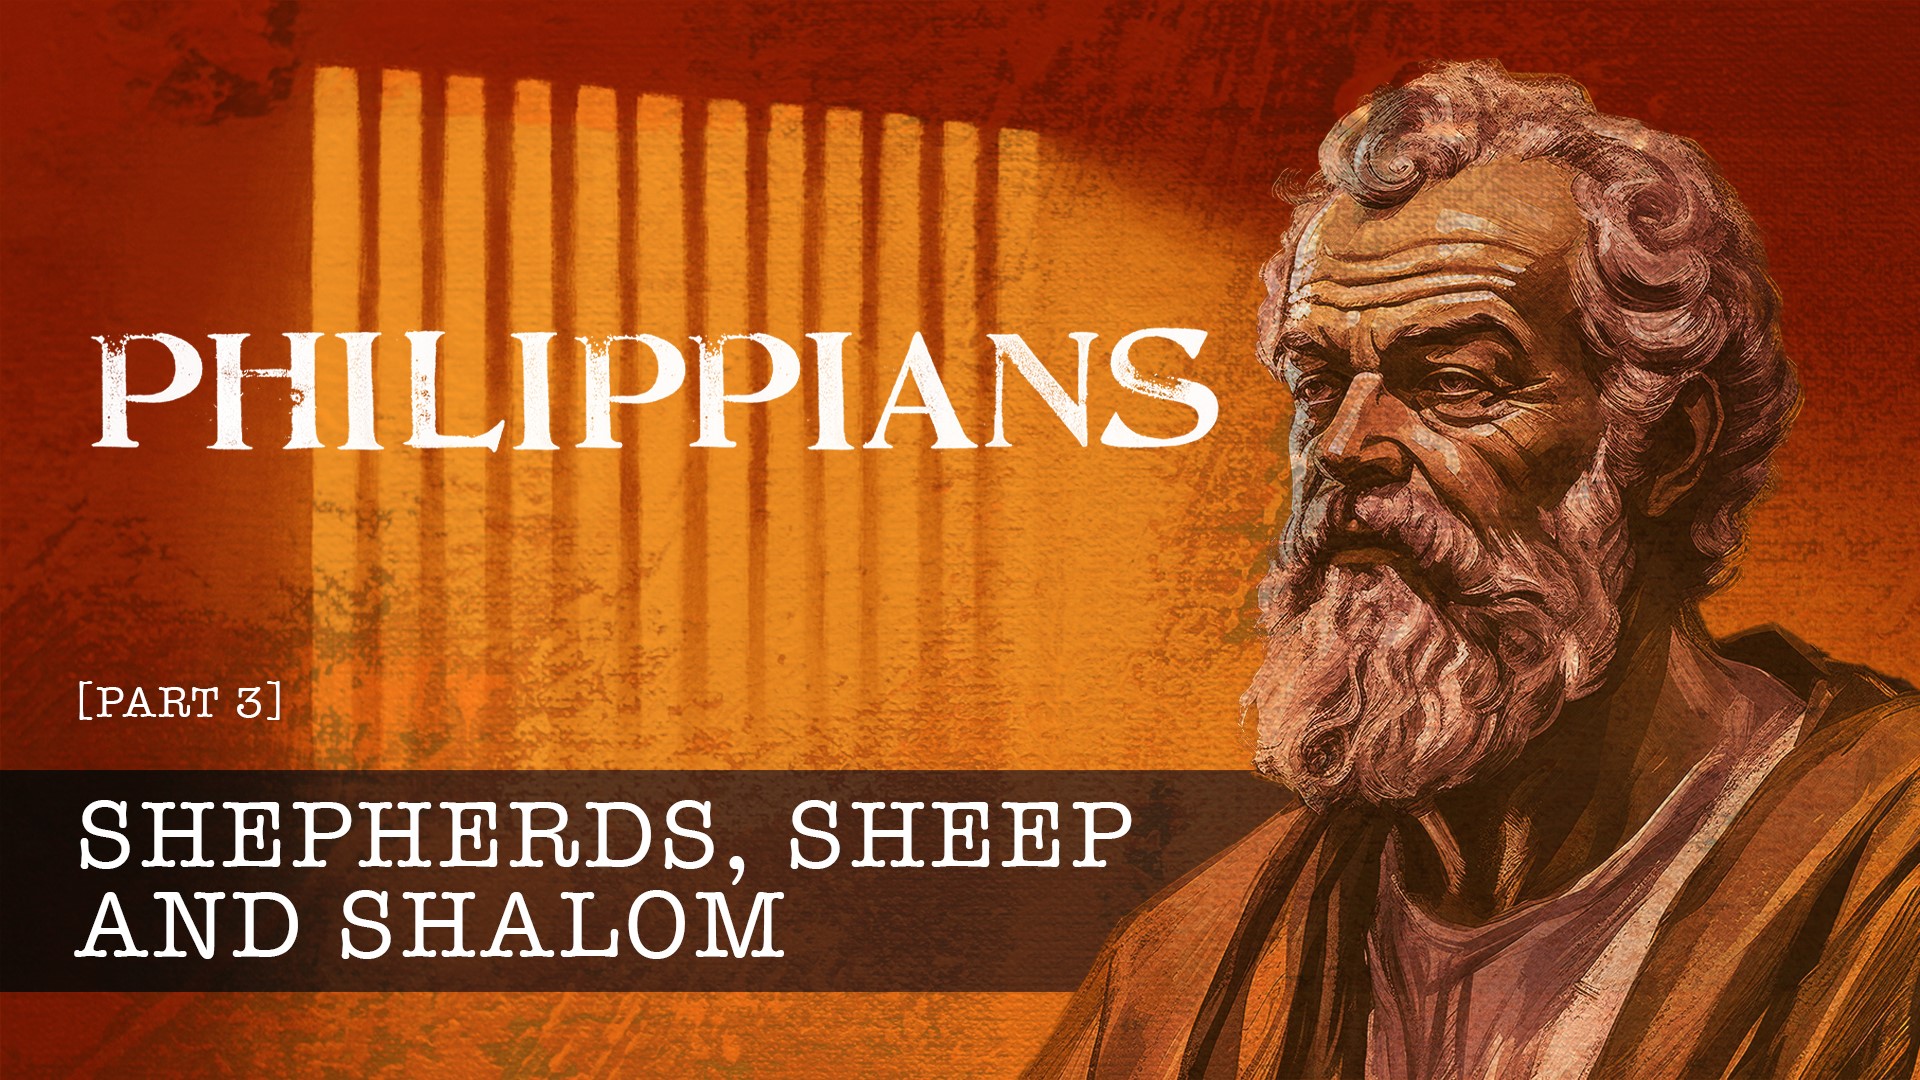 Part 3 - Shepherds, Sheep and Shalom